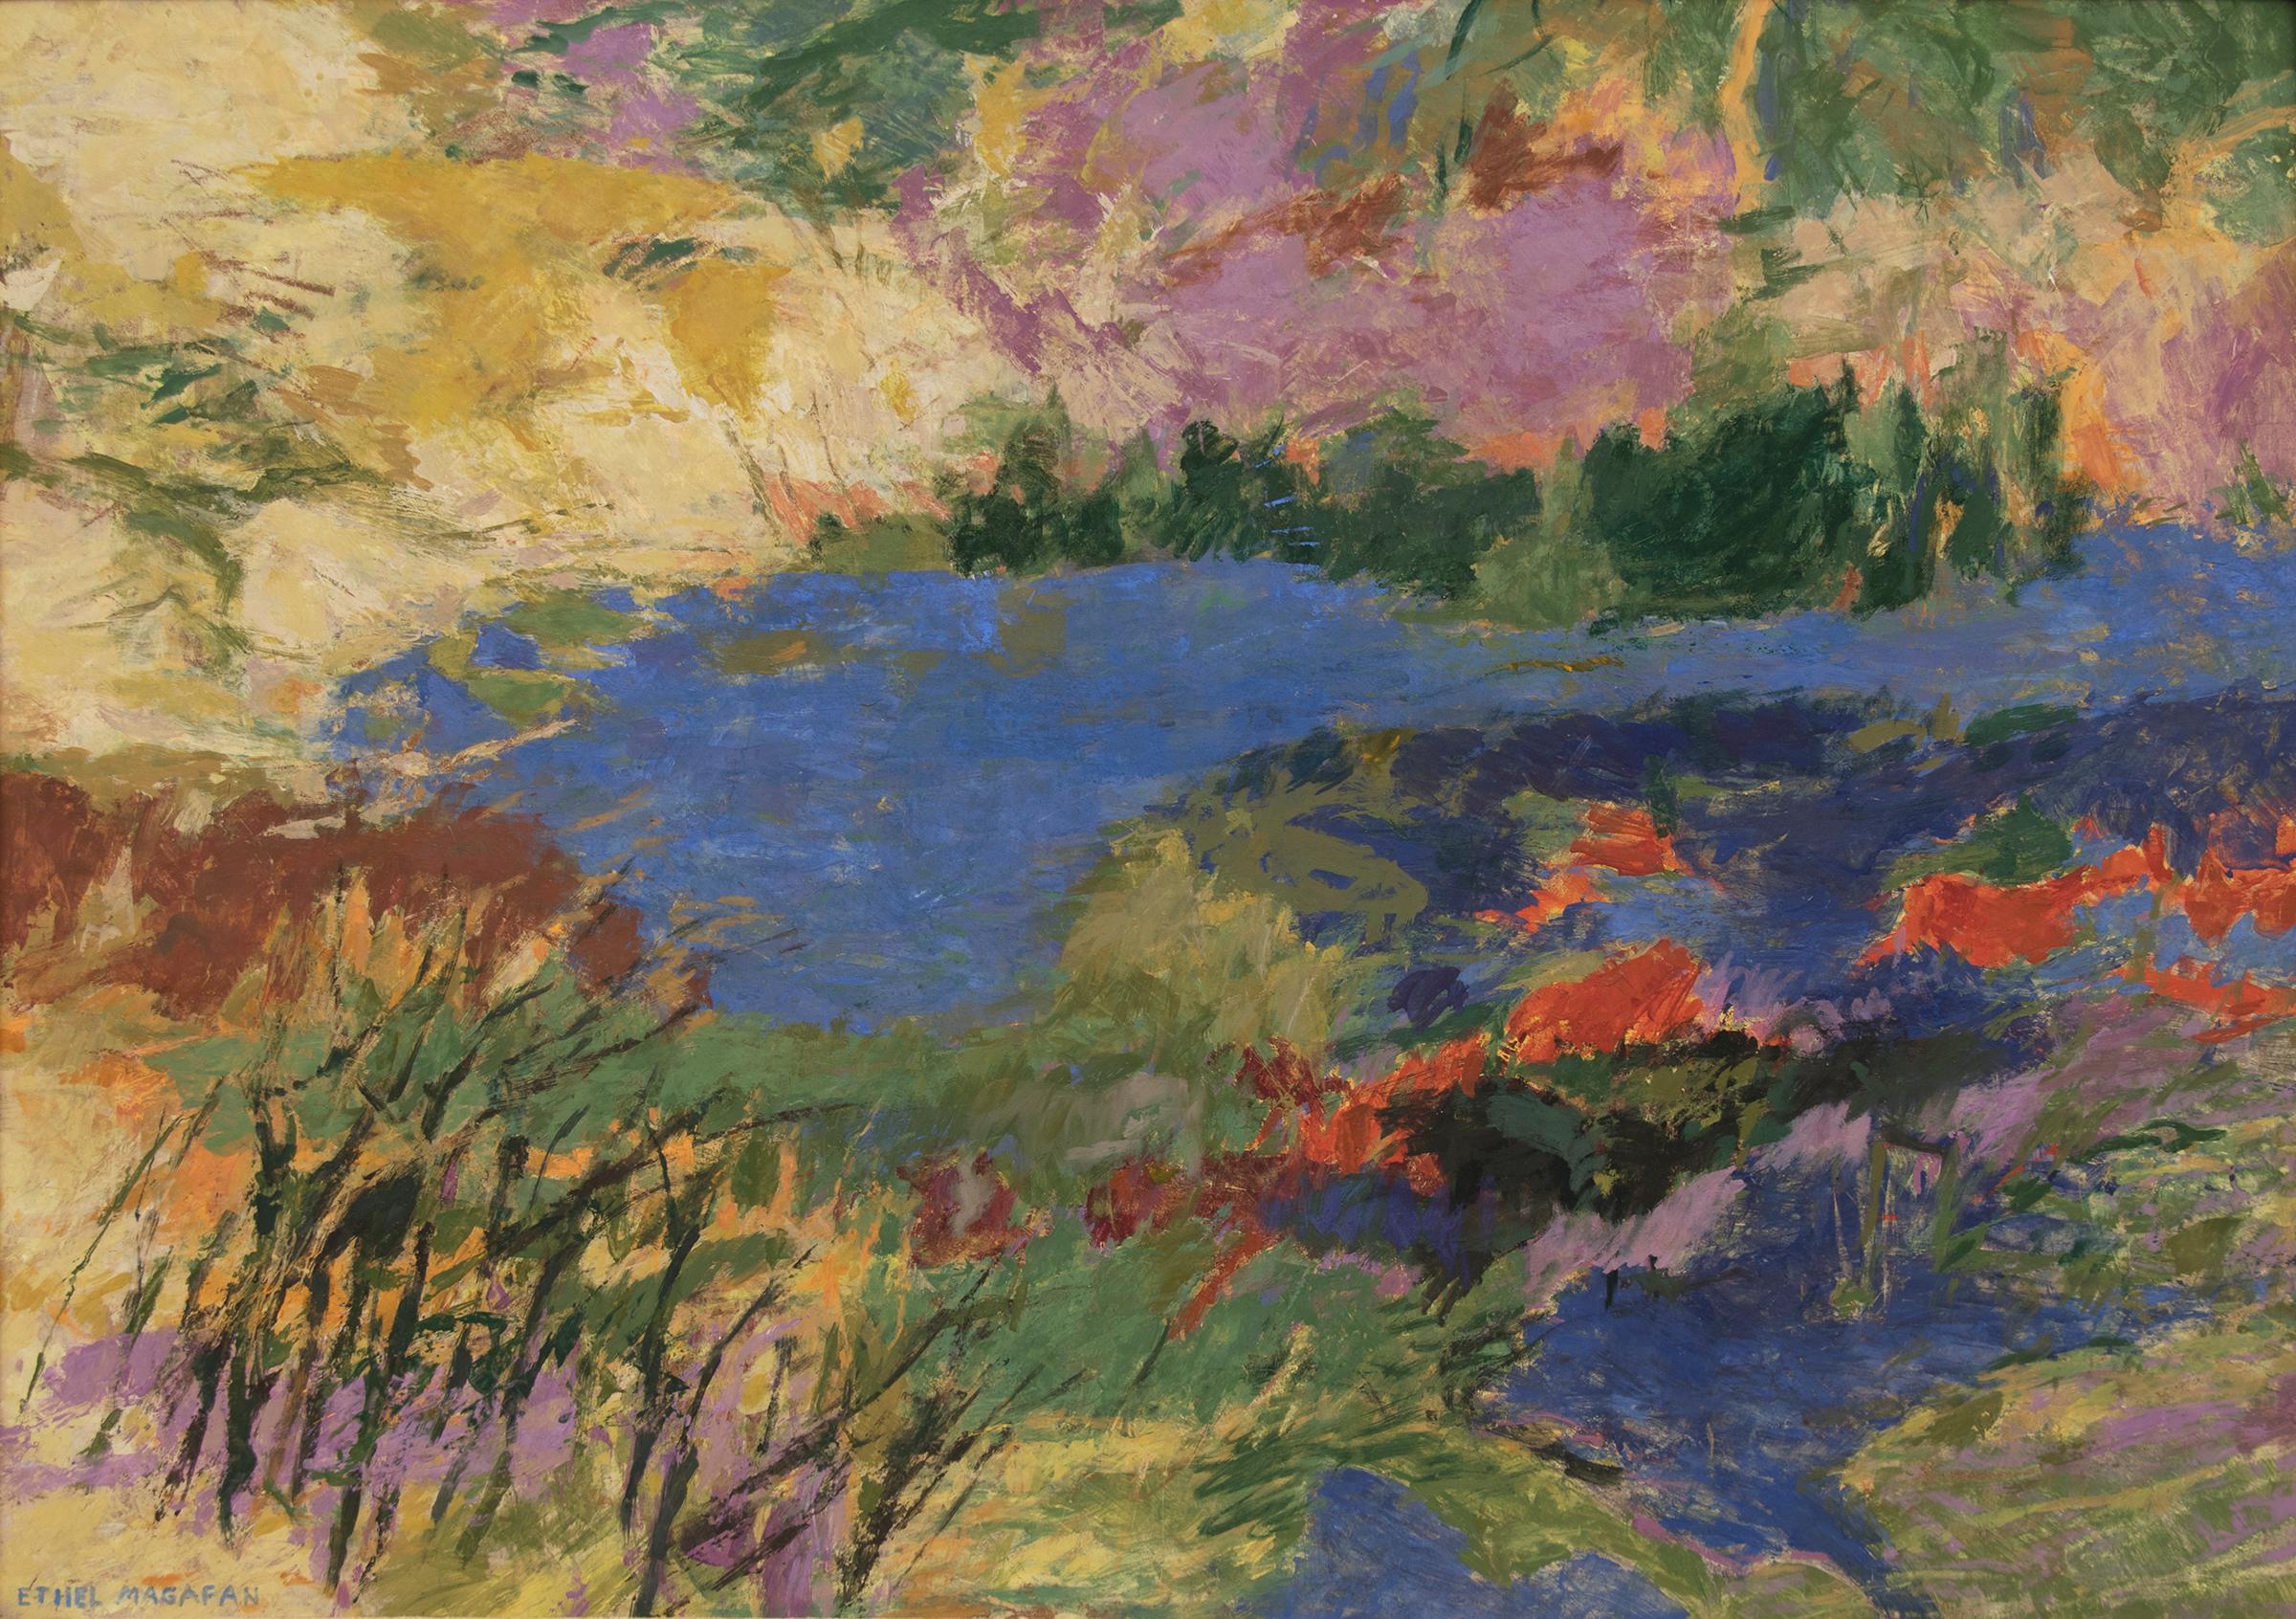 Ethel Magafan Landscape Painting - Quiet Water (Landscape with Pond)